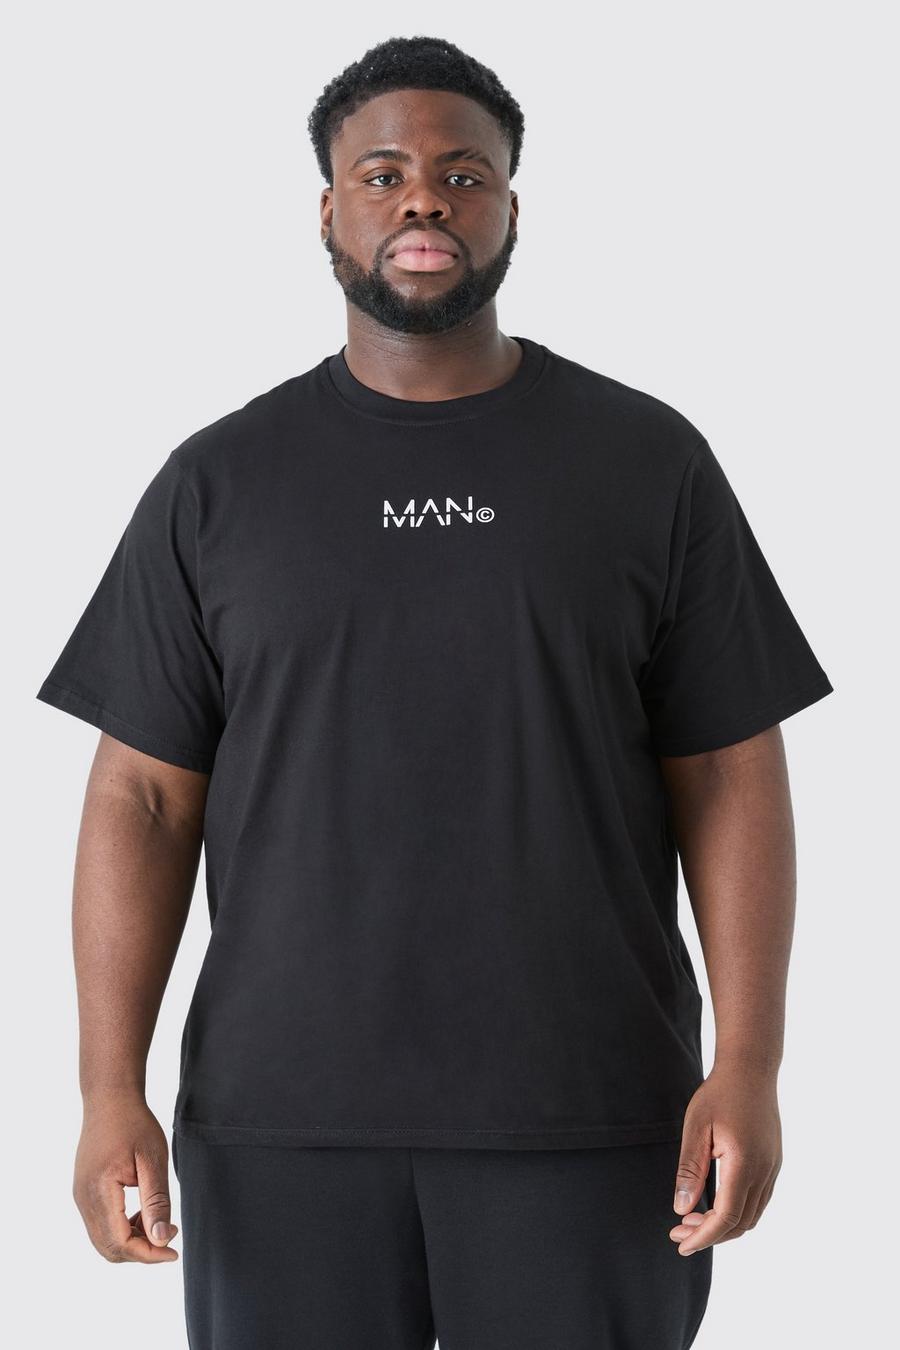 Plus T-Shirt mit Original Man-Print, Black